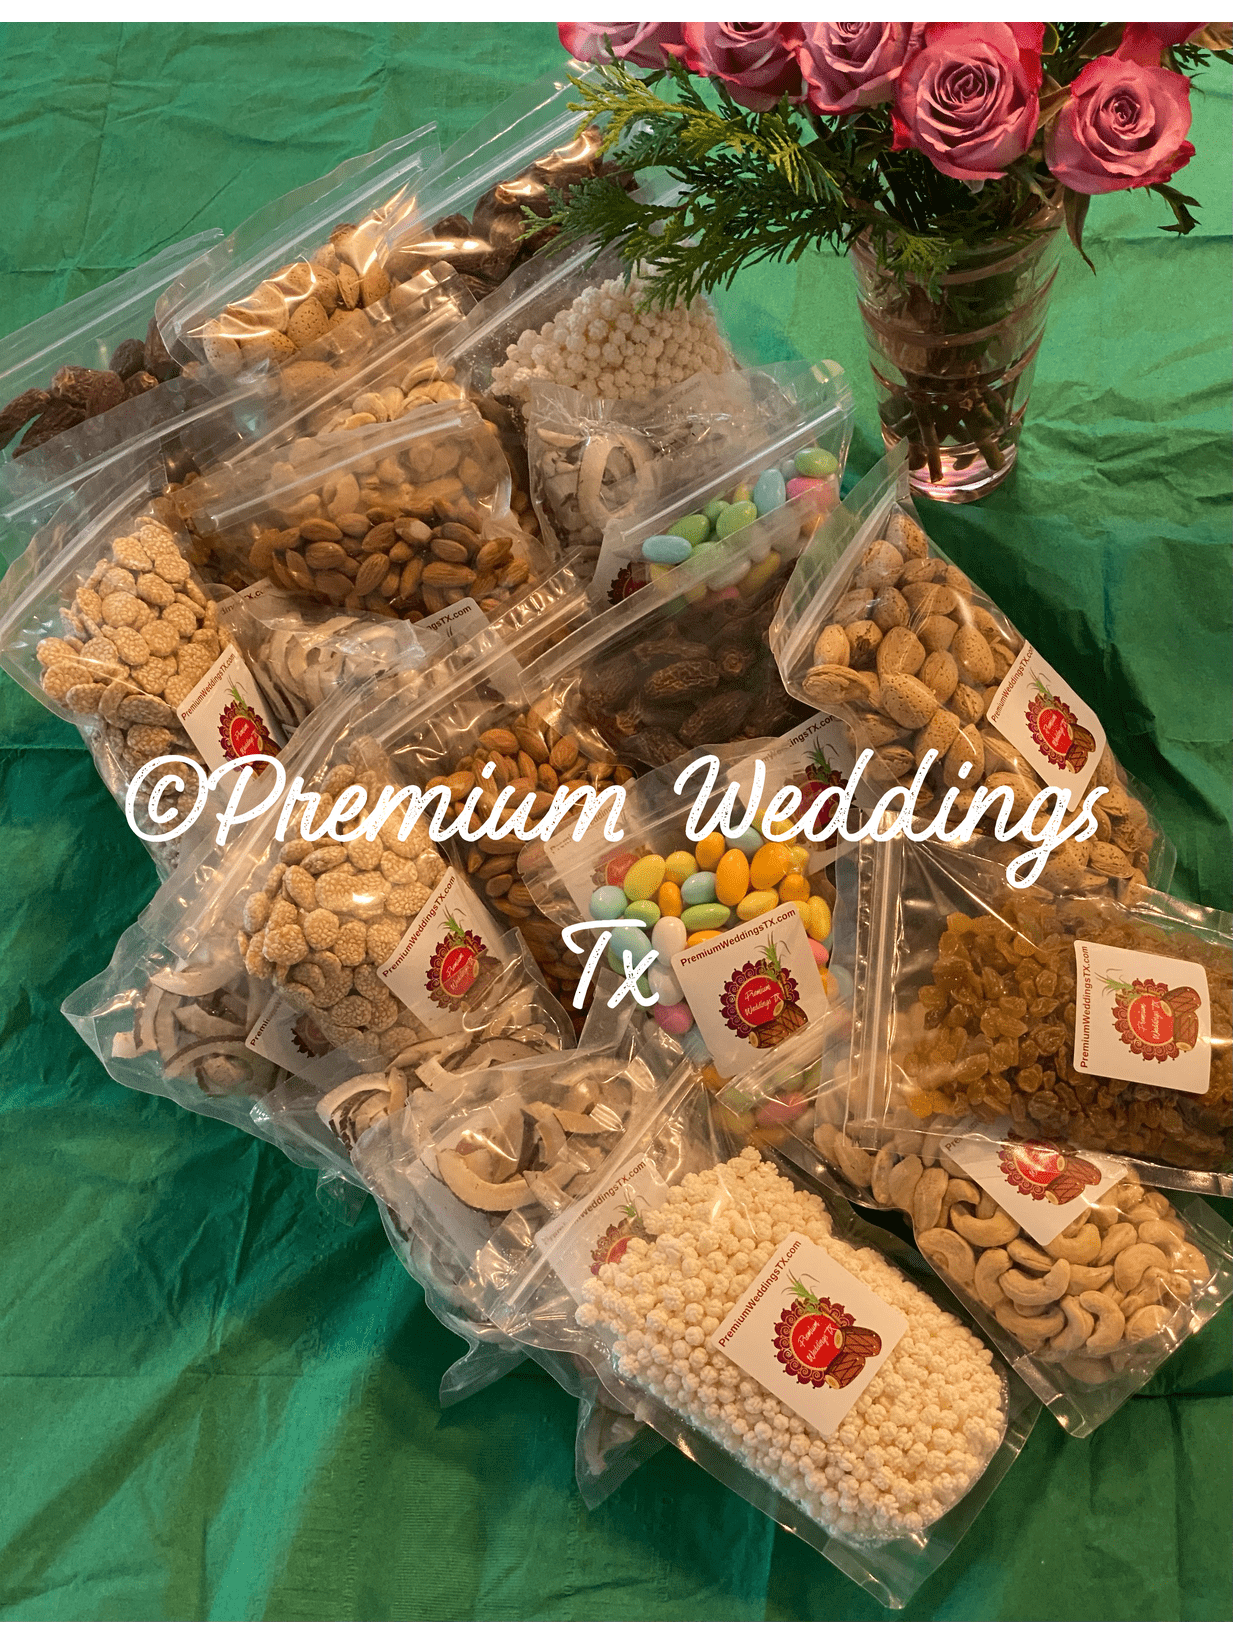 Bulk Dry Fruit Bidh - Premium Weddings TX